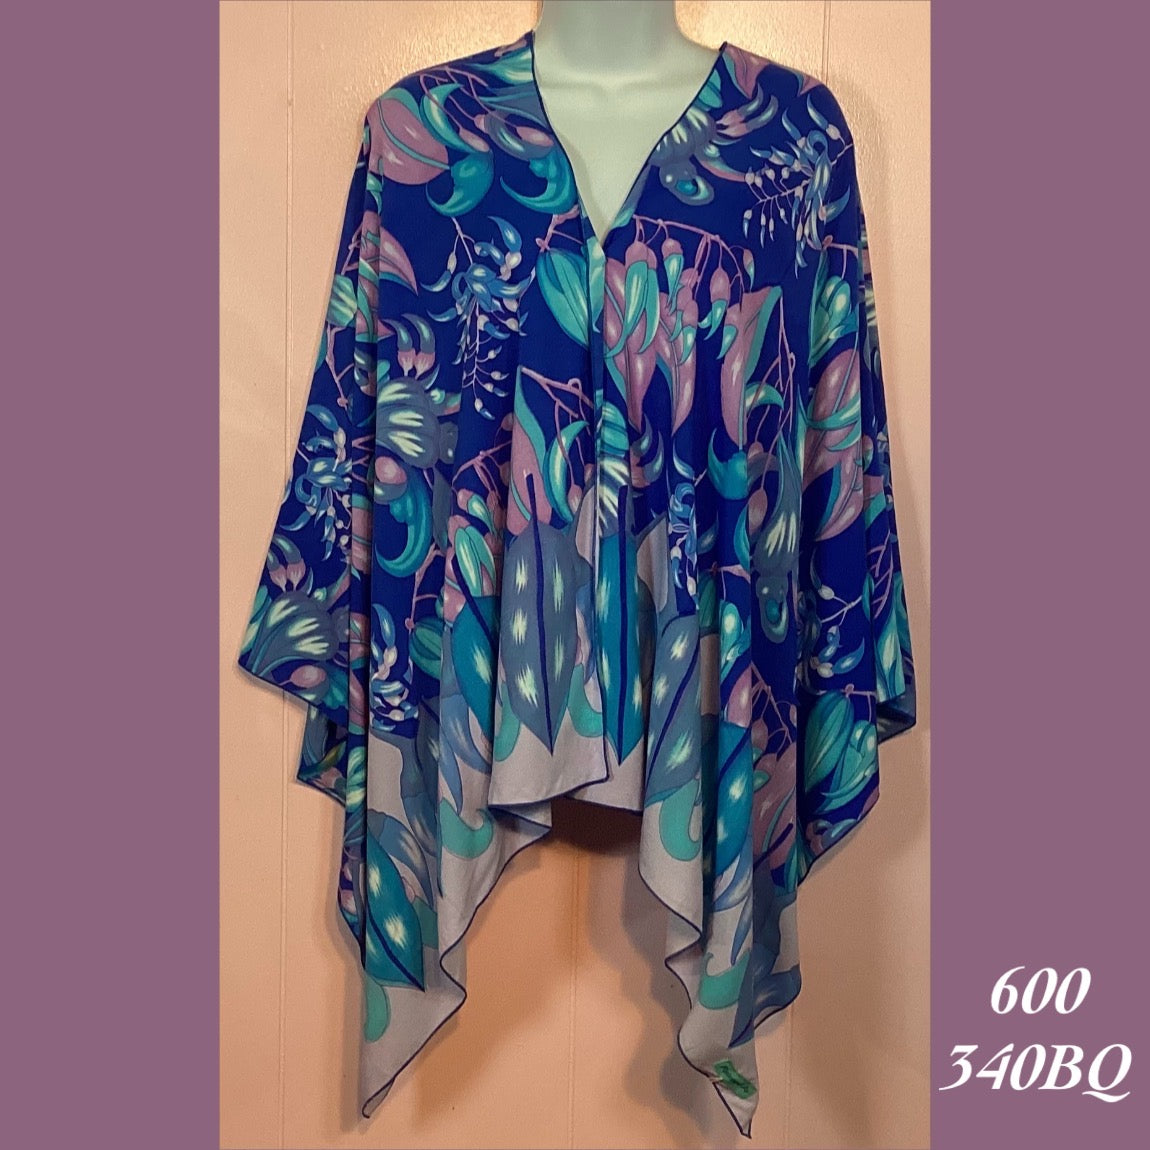 600 - 340BQ , Shoulder wrap sarong